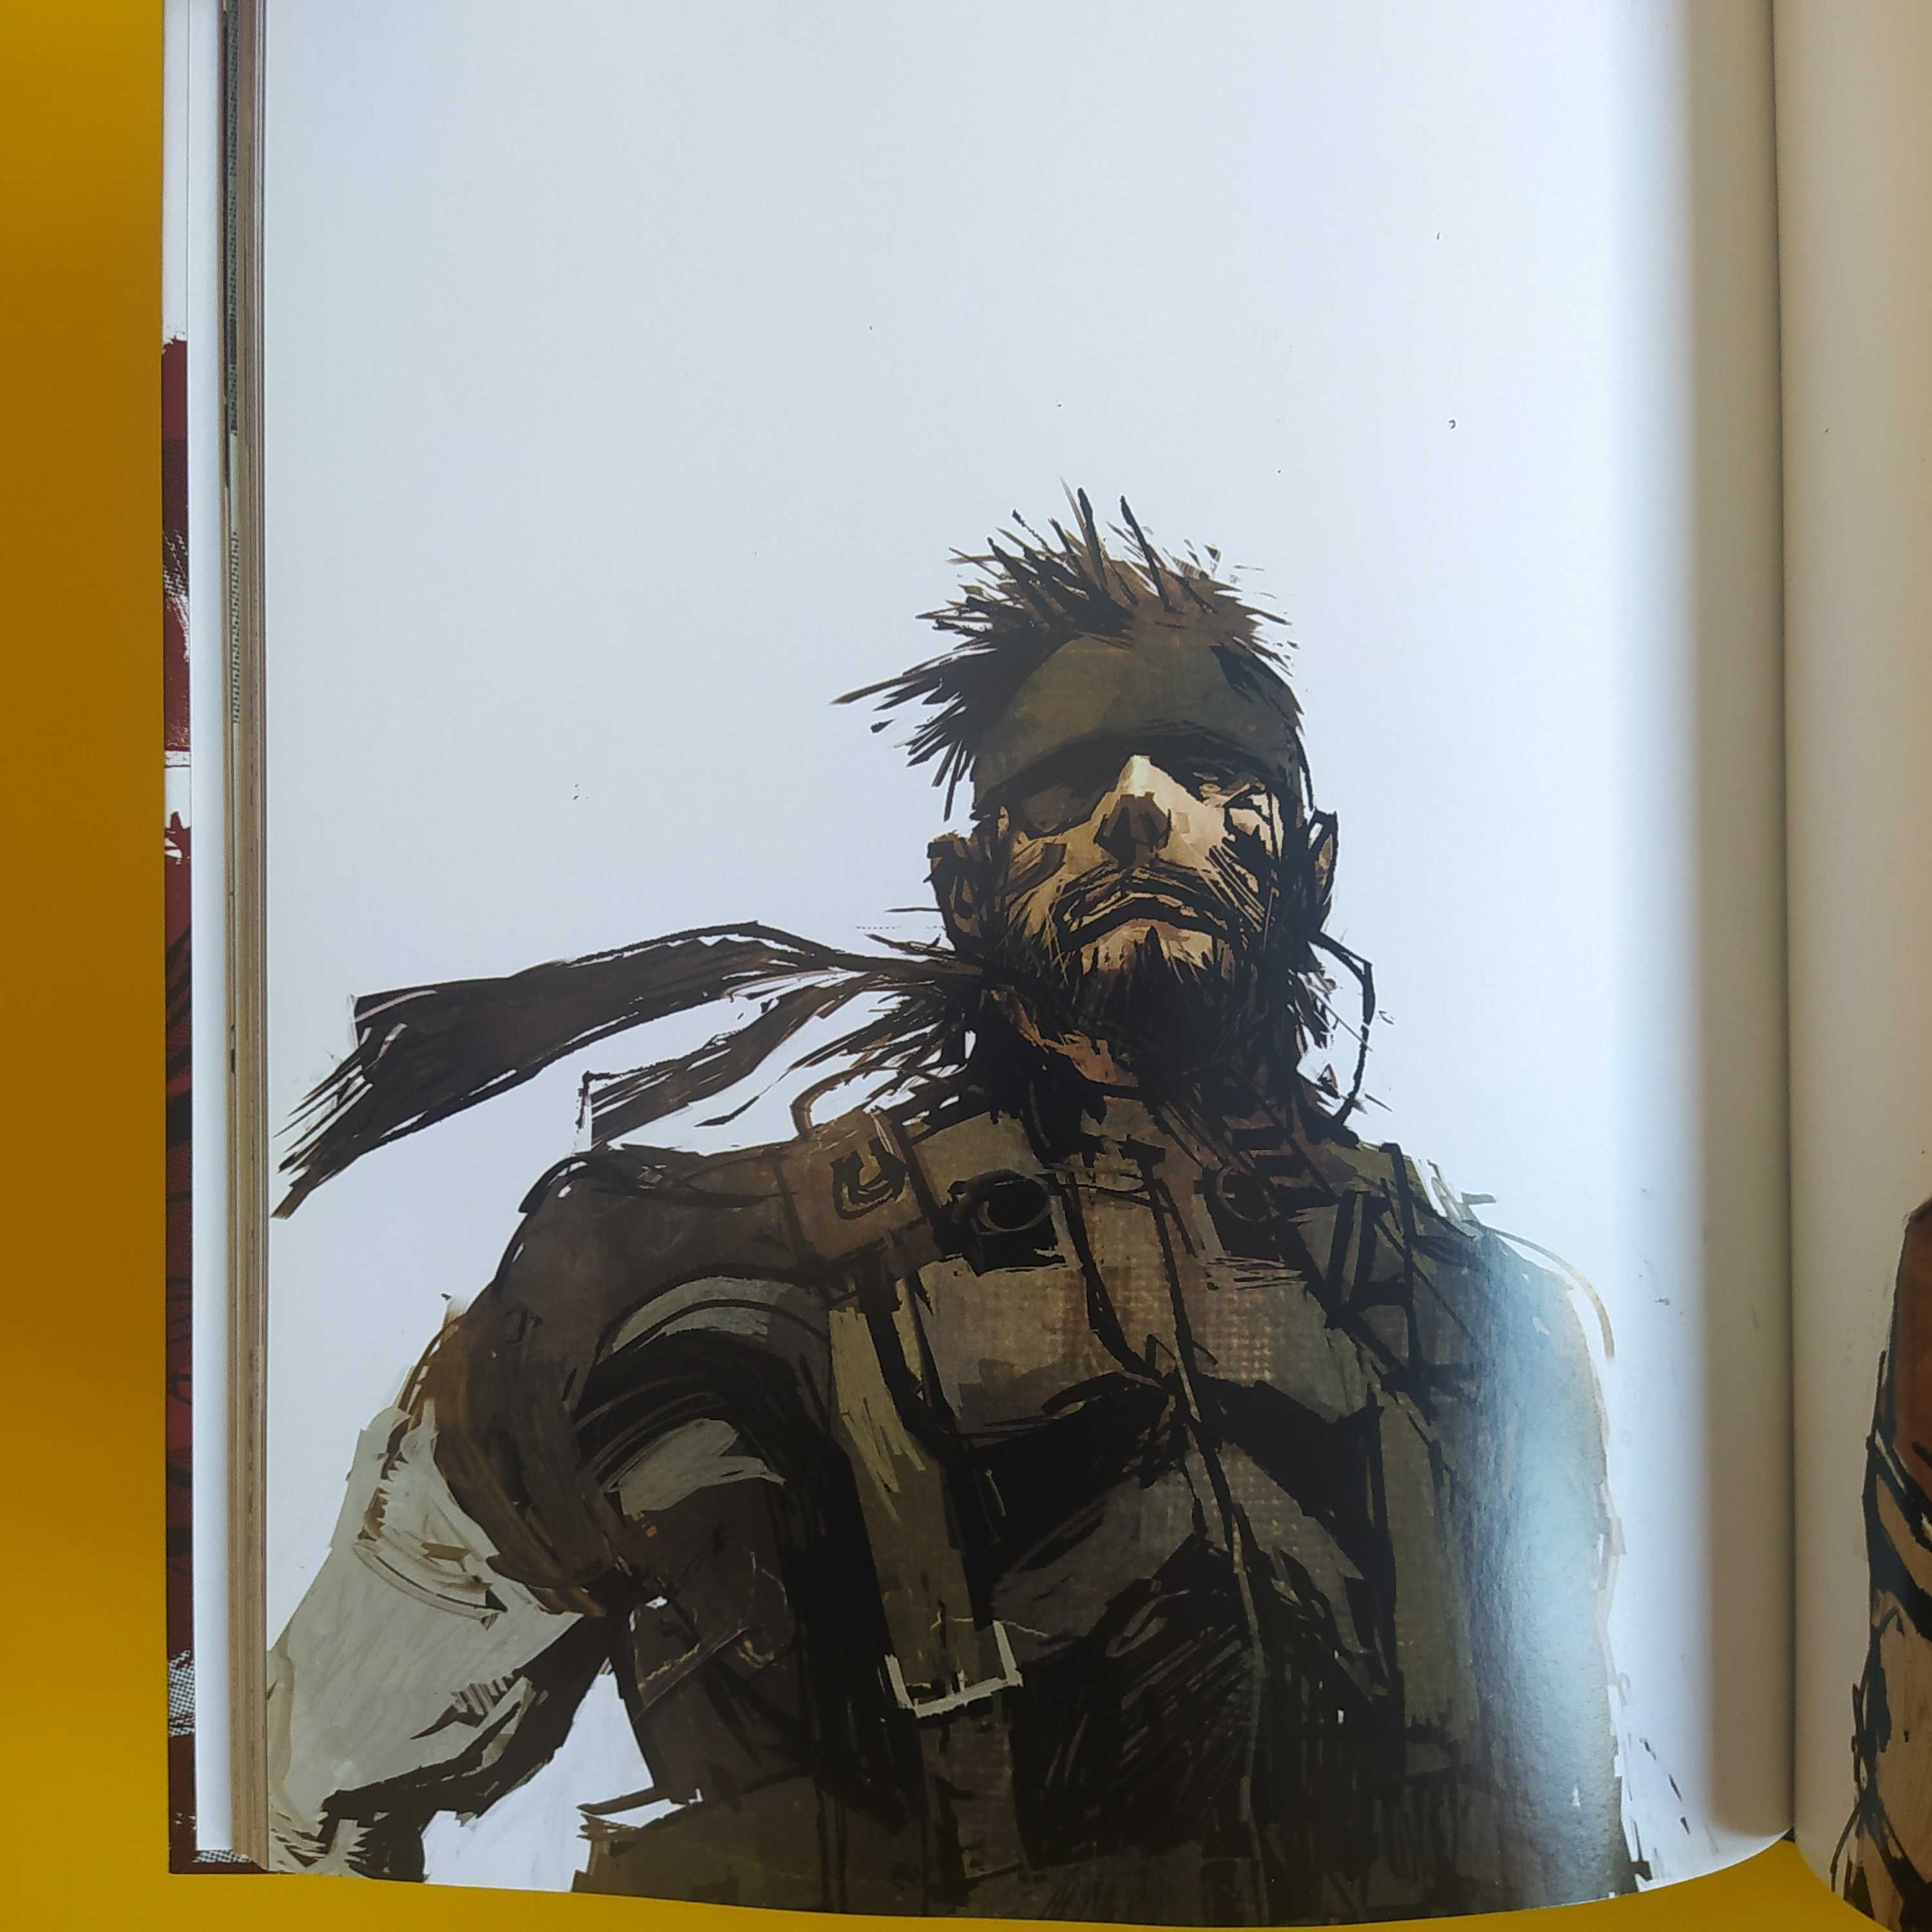 Livro Ashley Wood’s Art Of Metal Gear Solid